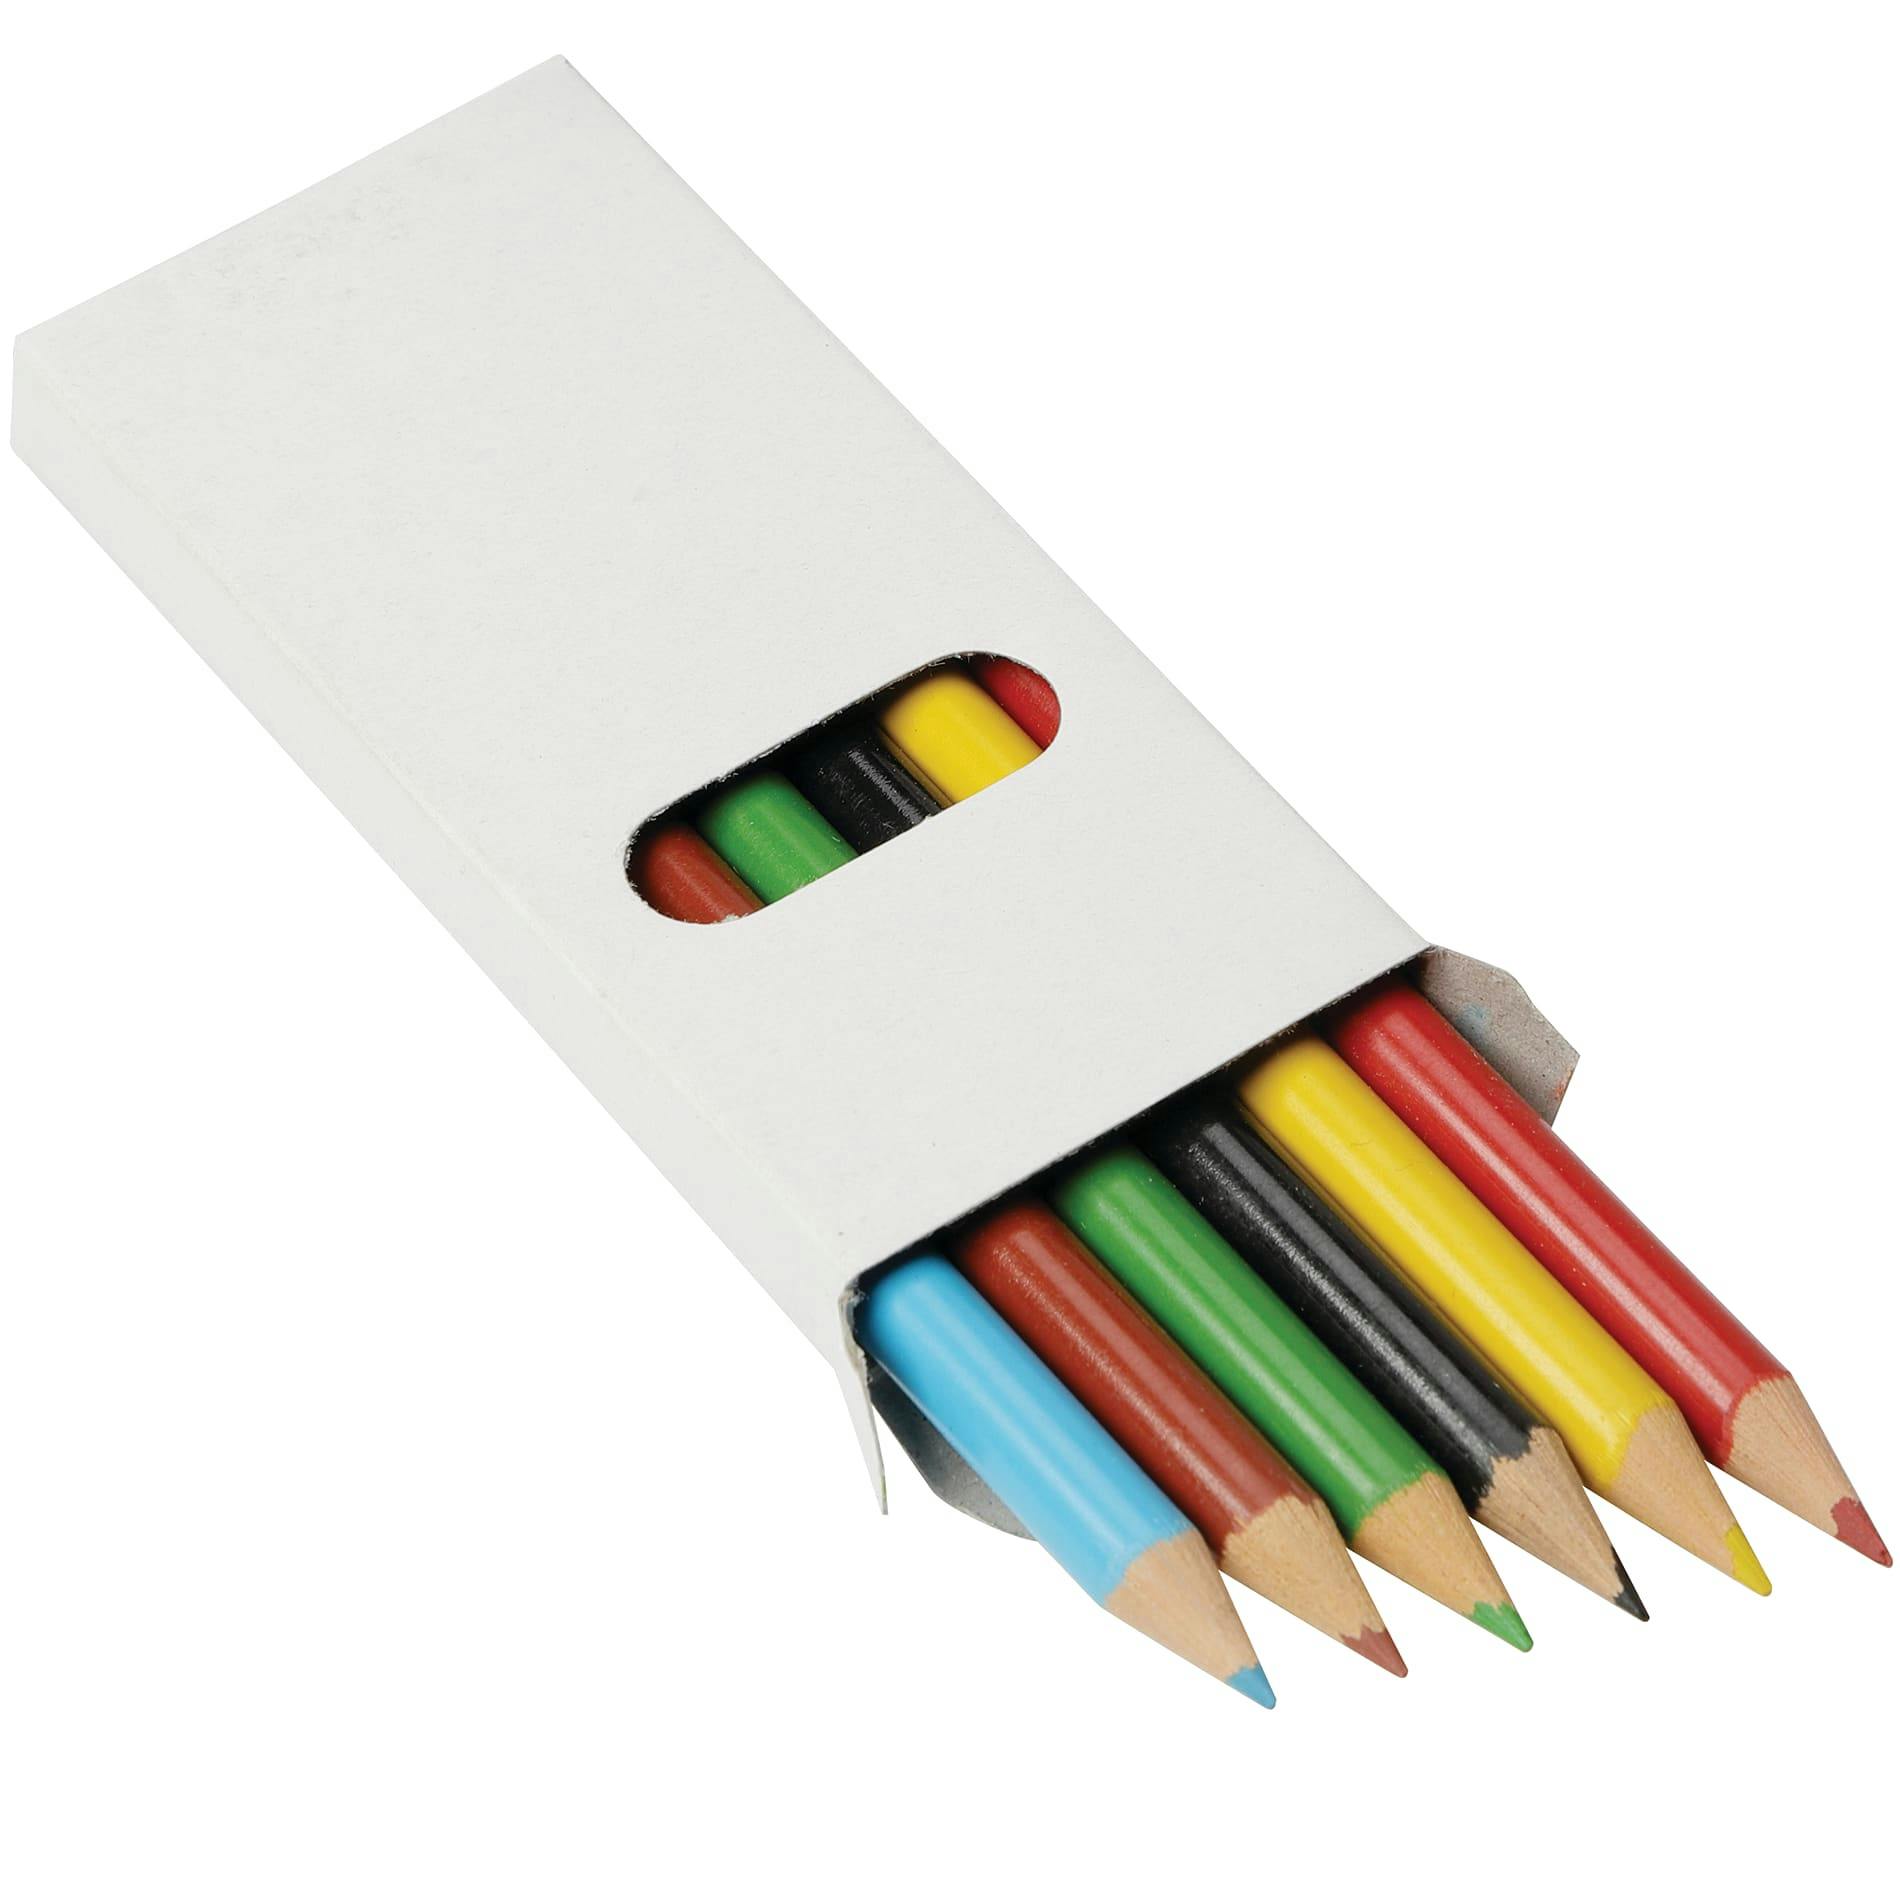 Sketchi 6-Piece Colored Pencil Set - additional Image 2